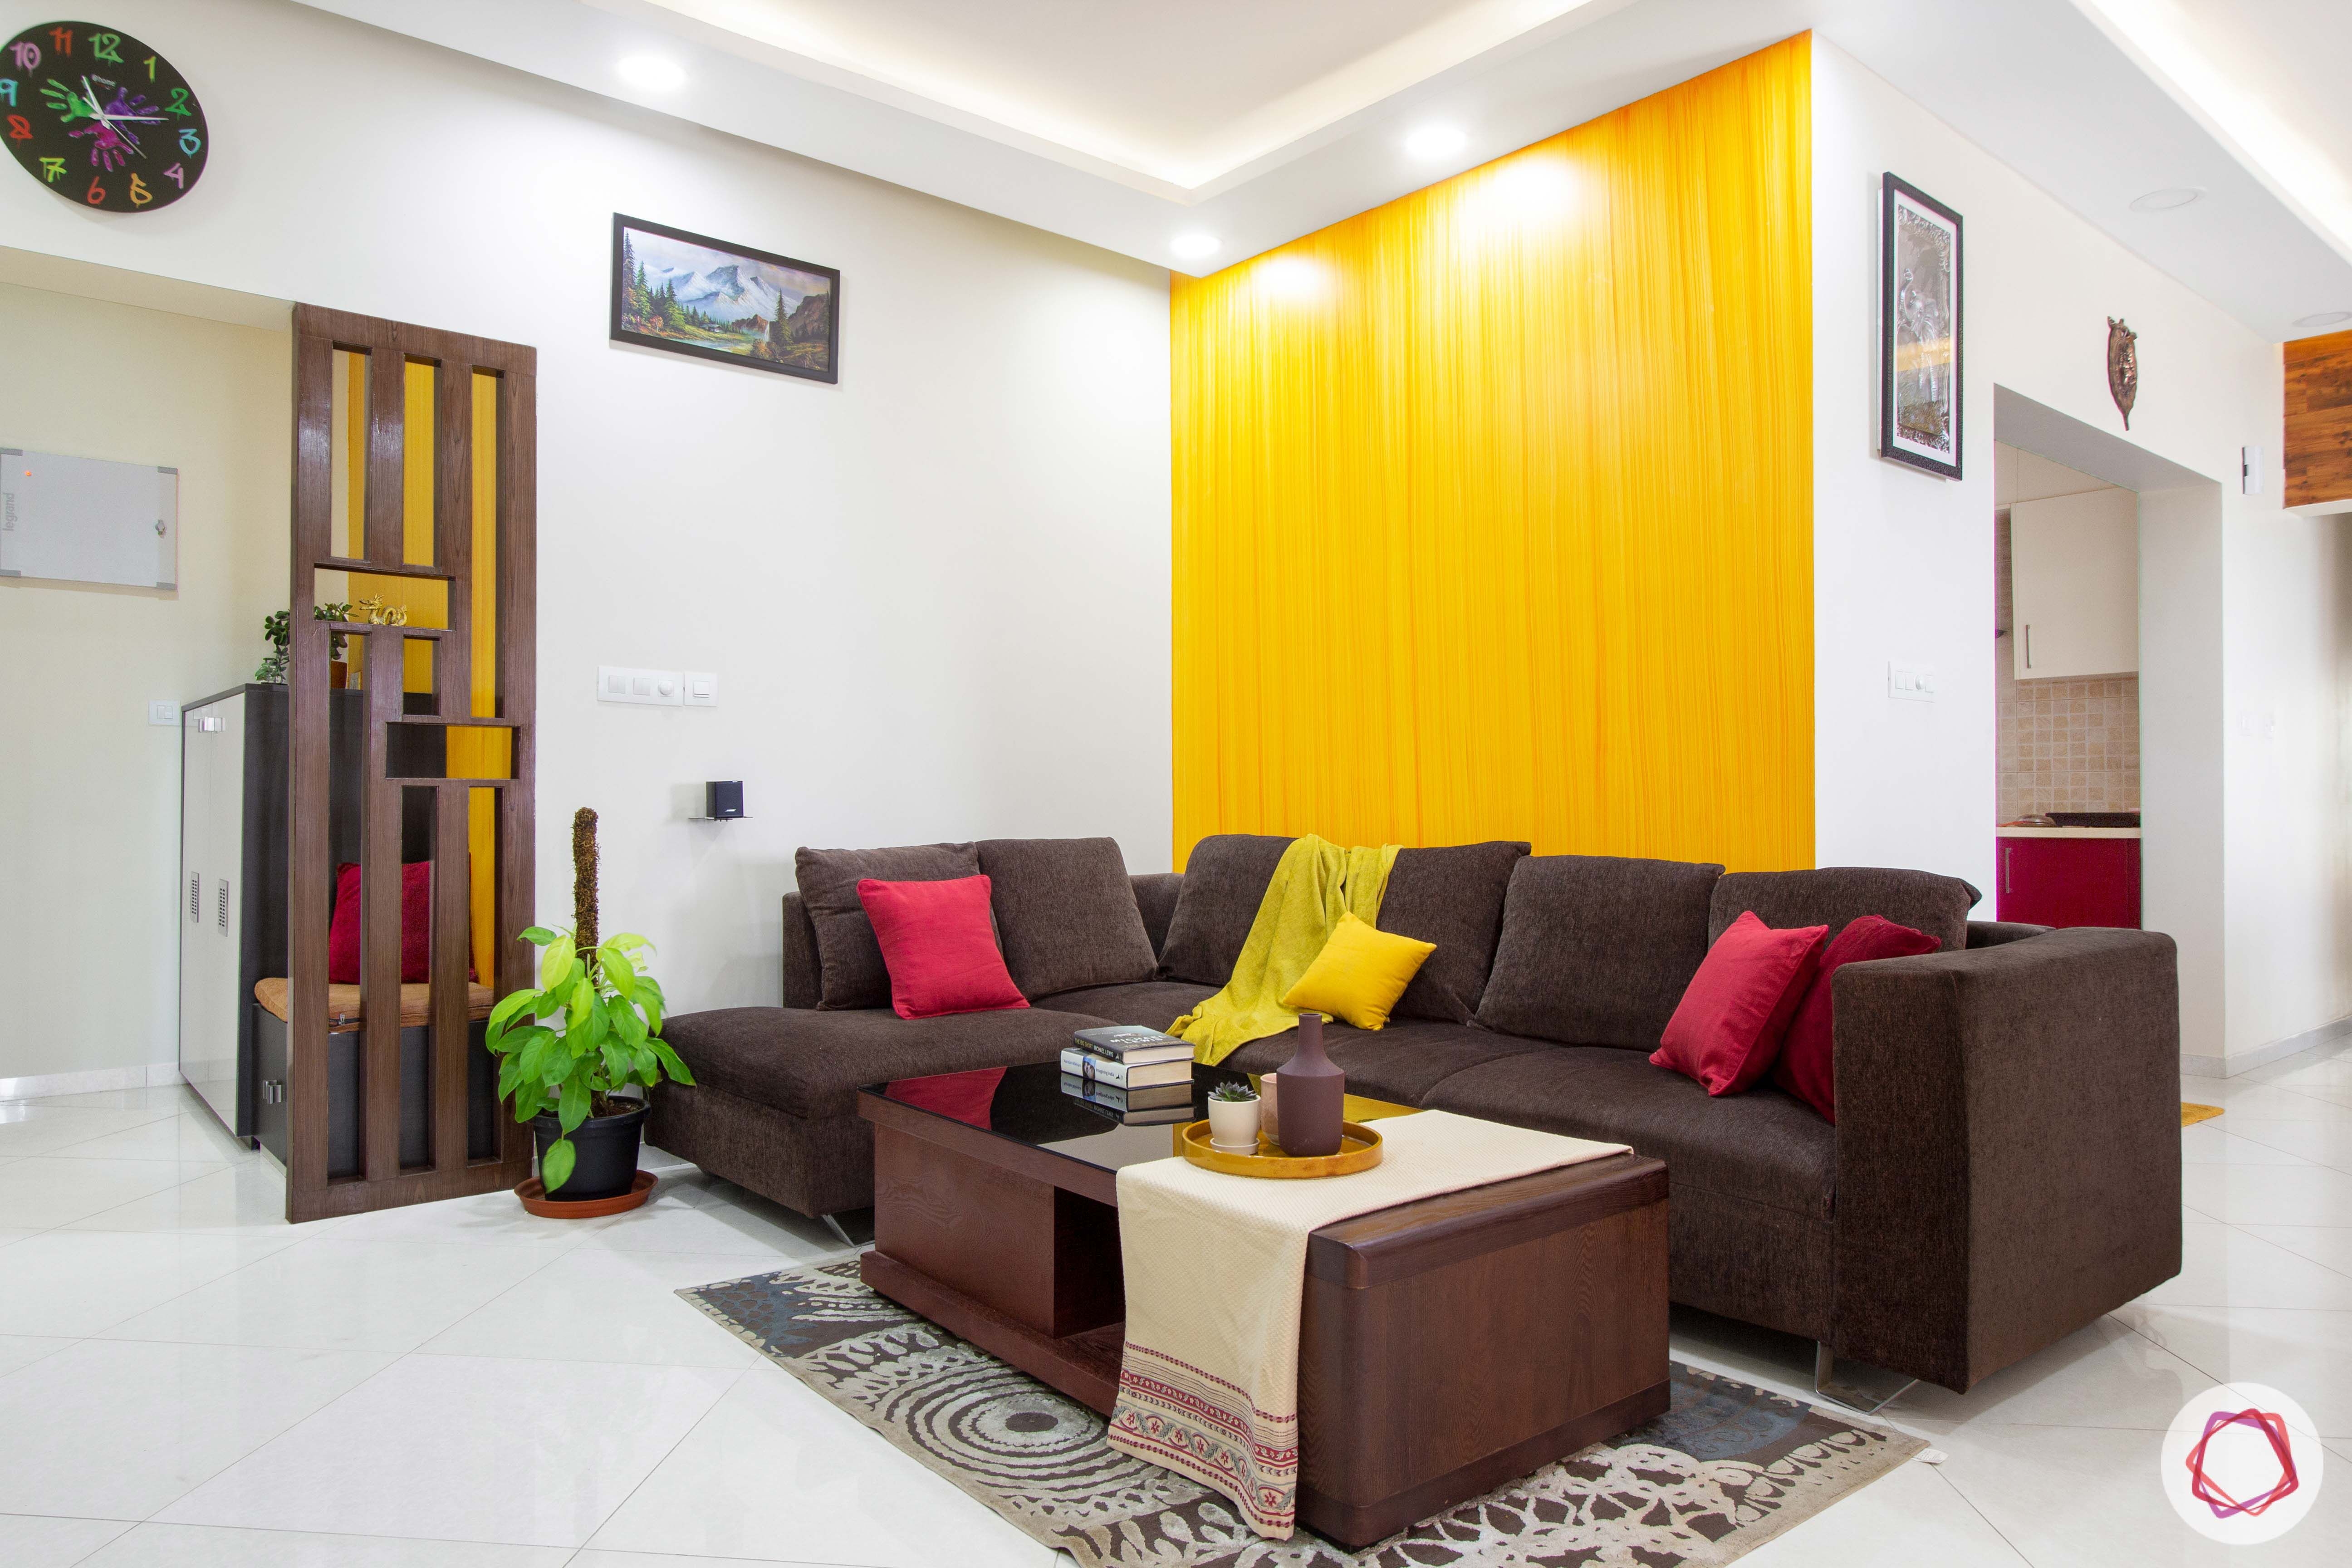 living-room-yellow-orange-textured-wall-sofa-pillows